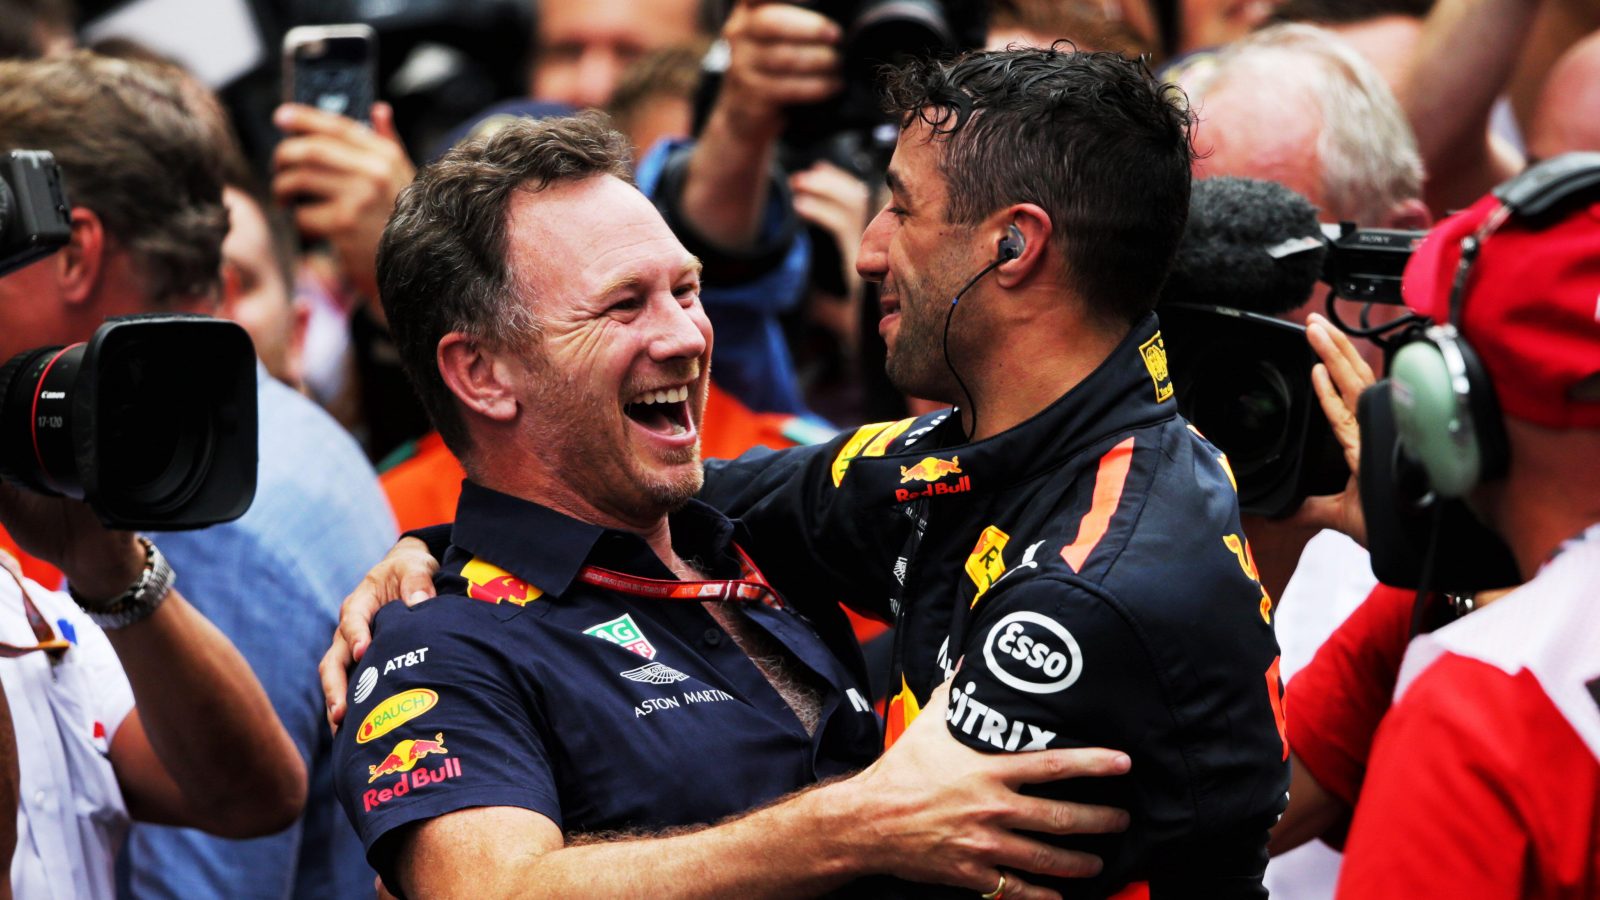 Christian Horner and Daniel Ricciardo embrace. Monaco, May 2018.